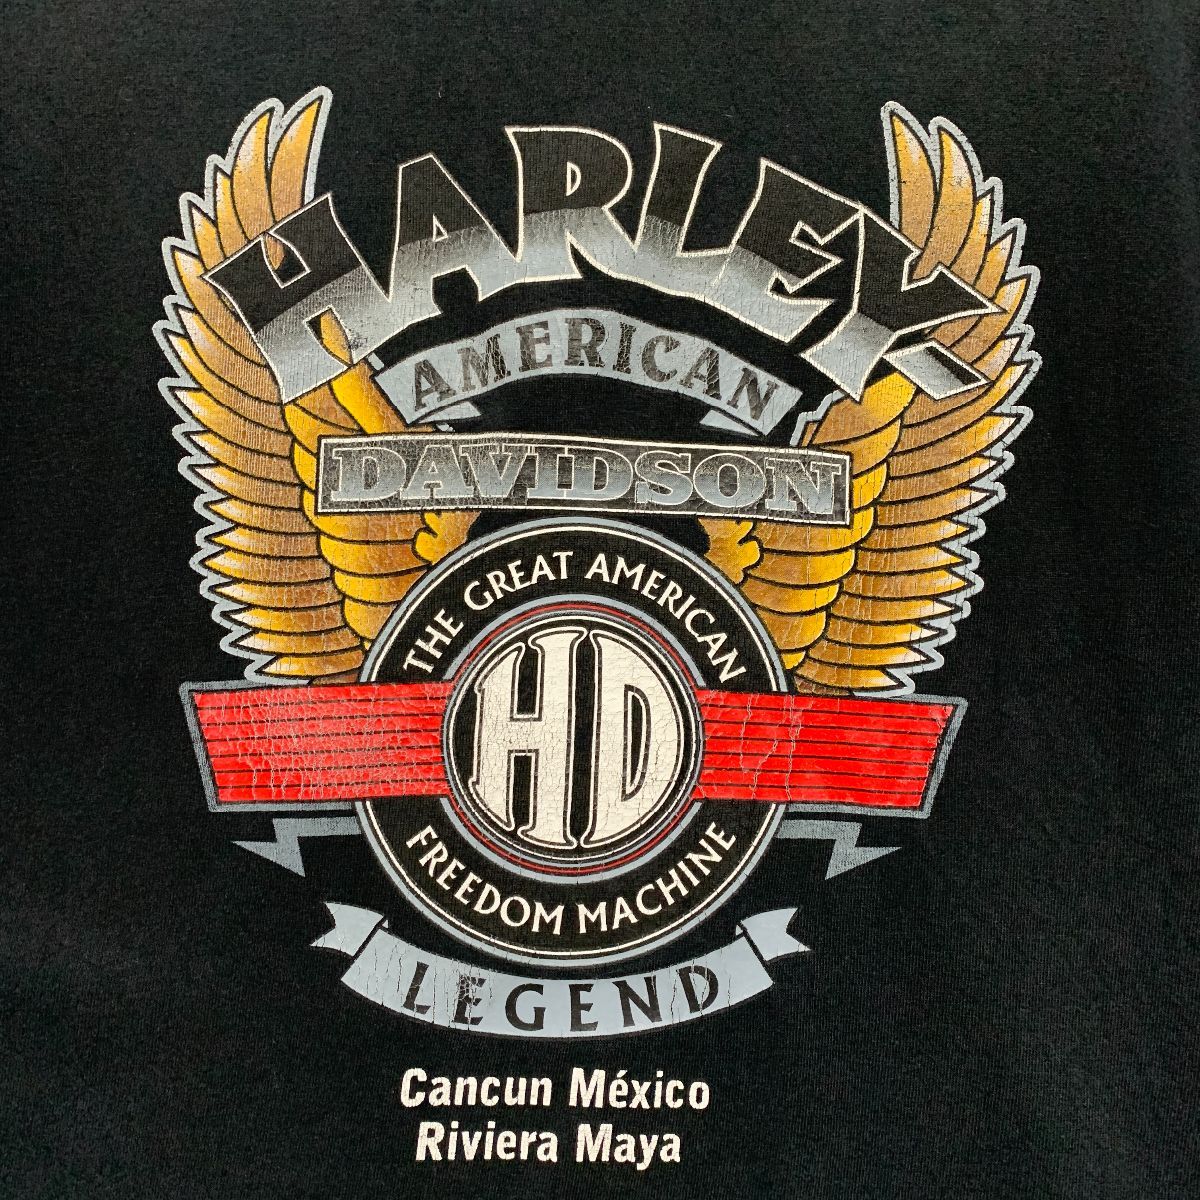 Harley Davidson Cancun American Legend T-shirt | Boardwalk Vintage